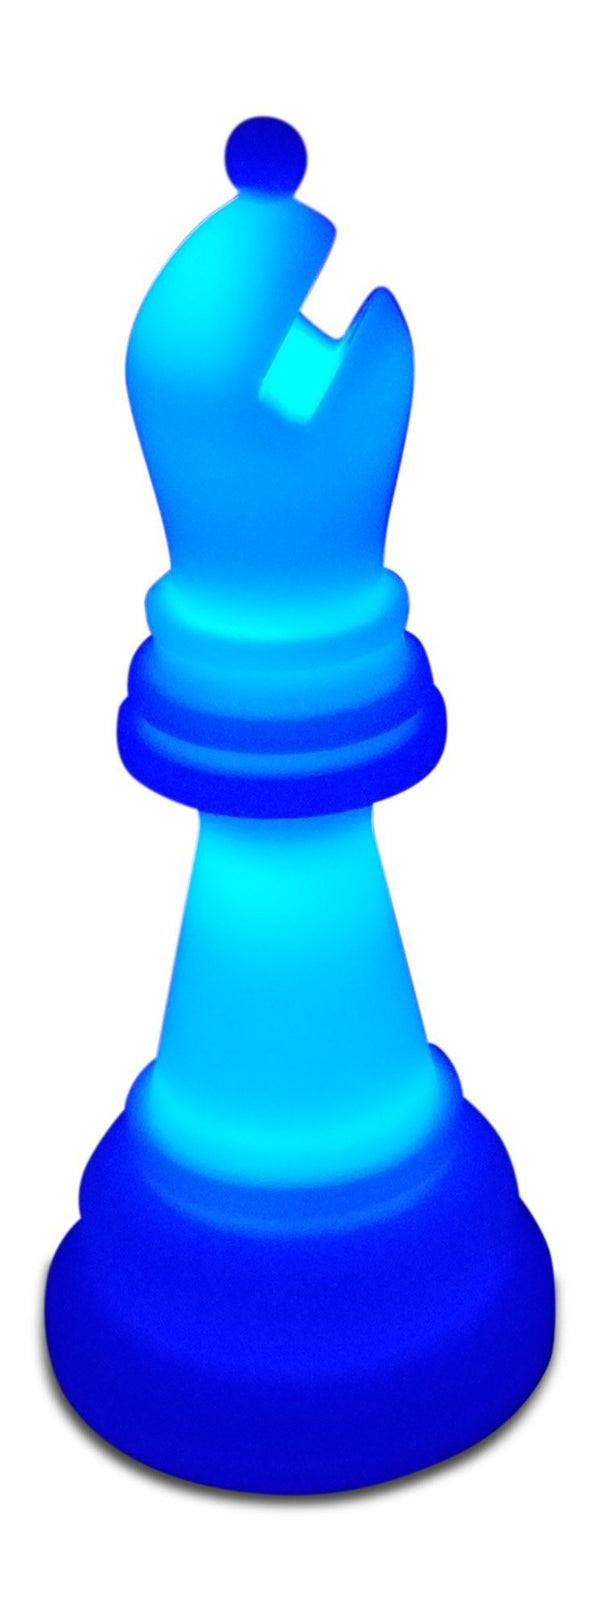 MegaChess 28 Inch Perfect Bishop Light-Up Giant Chess Piece - Blue | Default Title | MegaChess.com